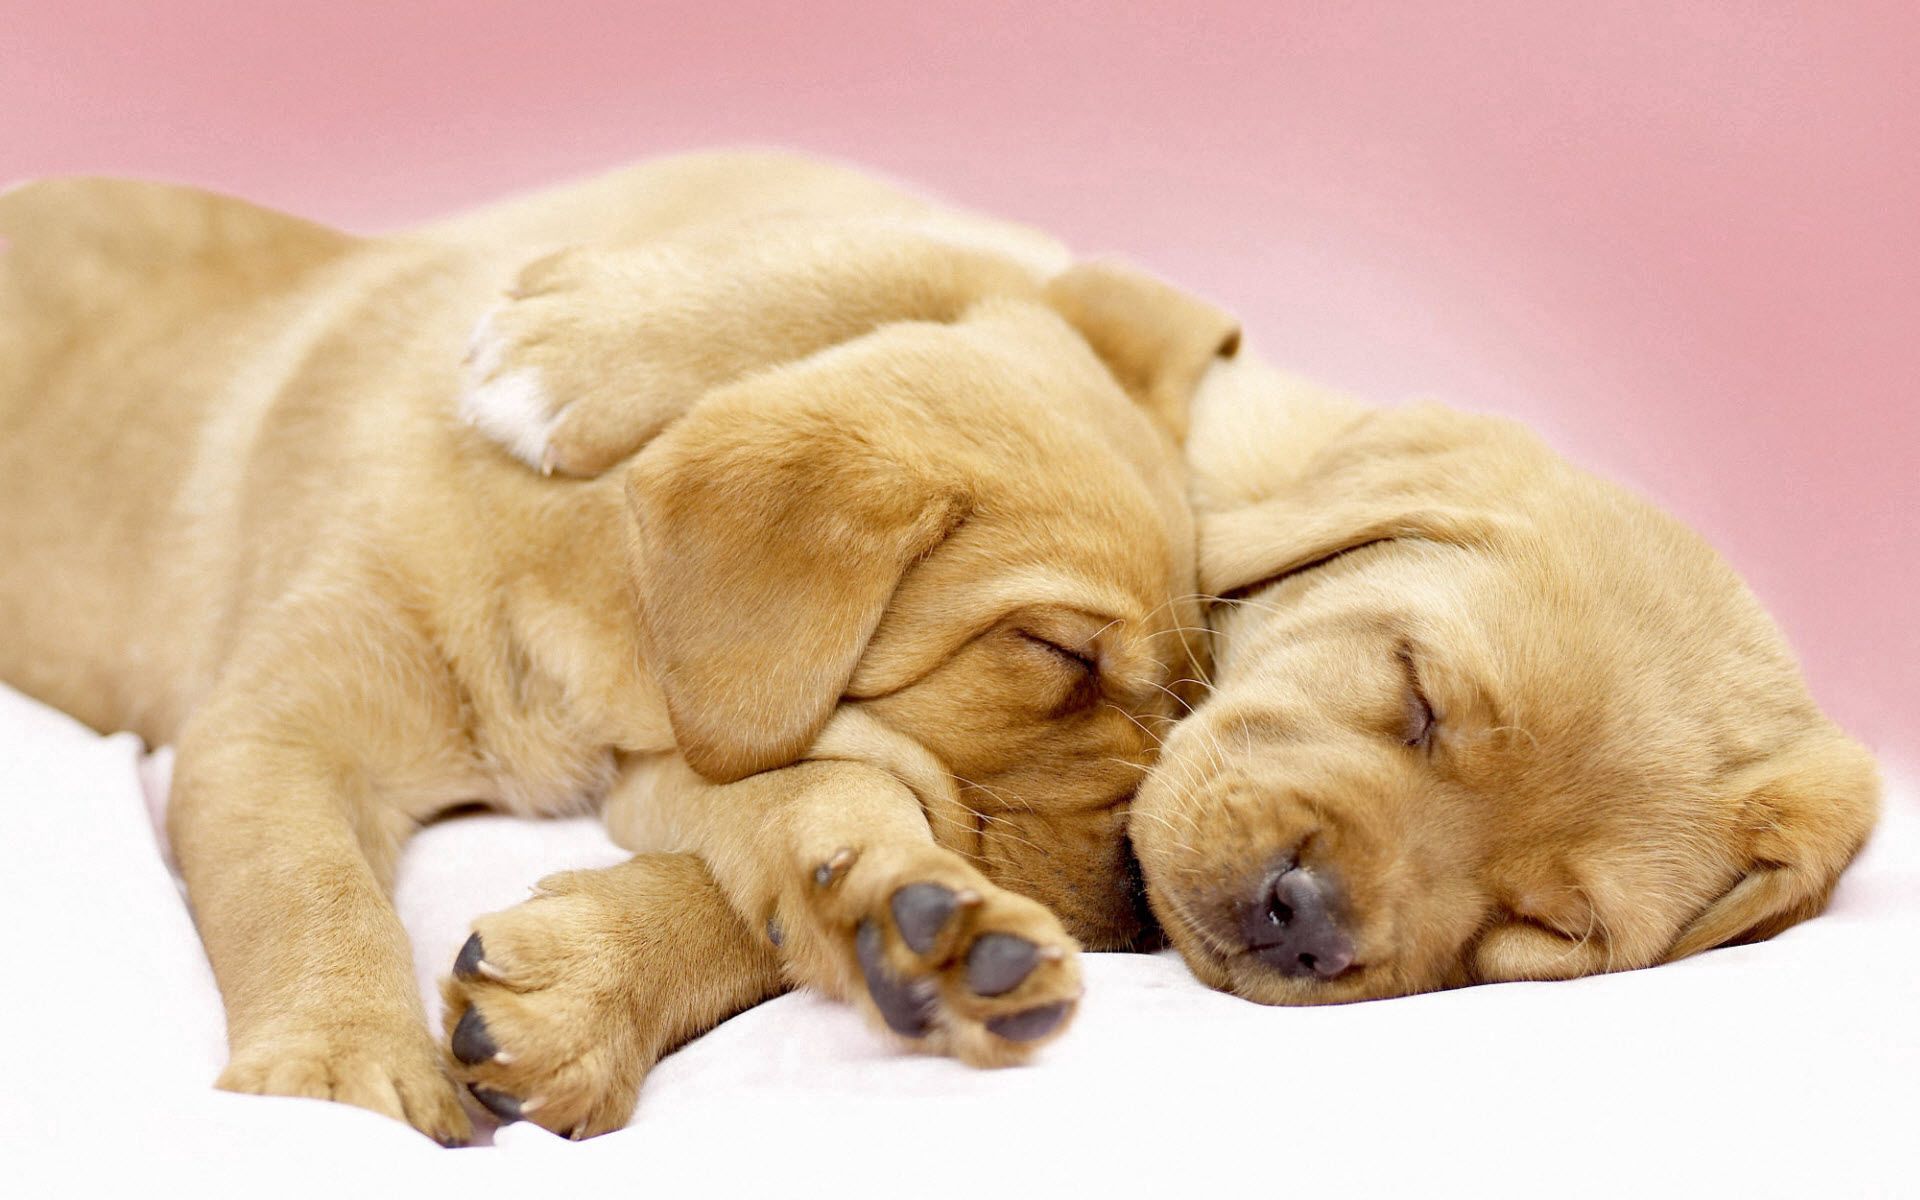 dream, cute, animals, sleep, labradors, puppies